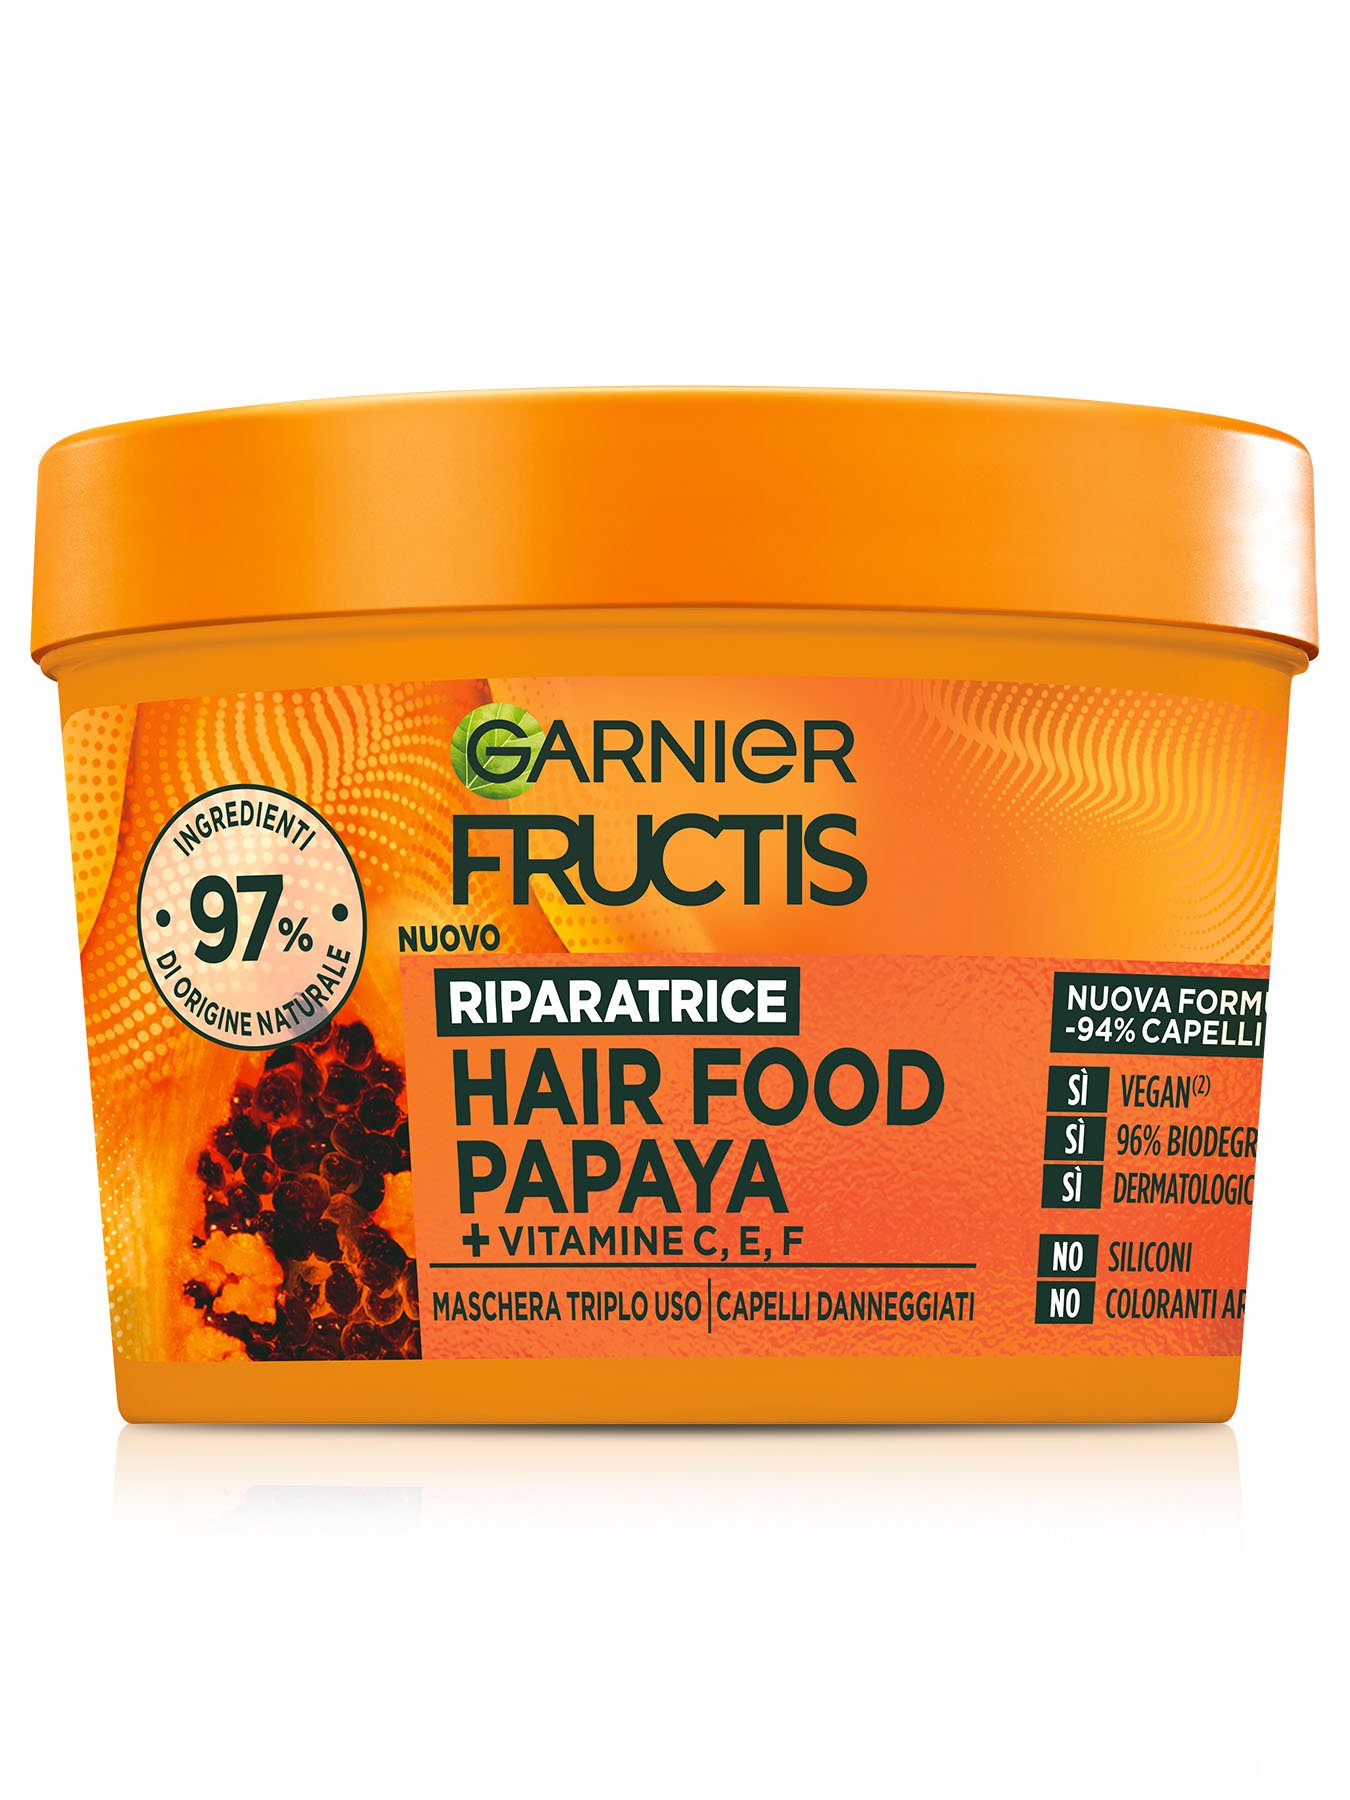 Fructis Hair Food Papaya Mask